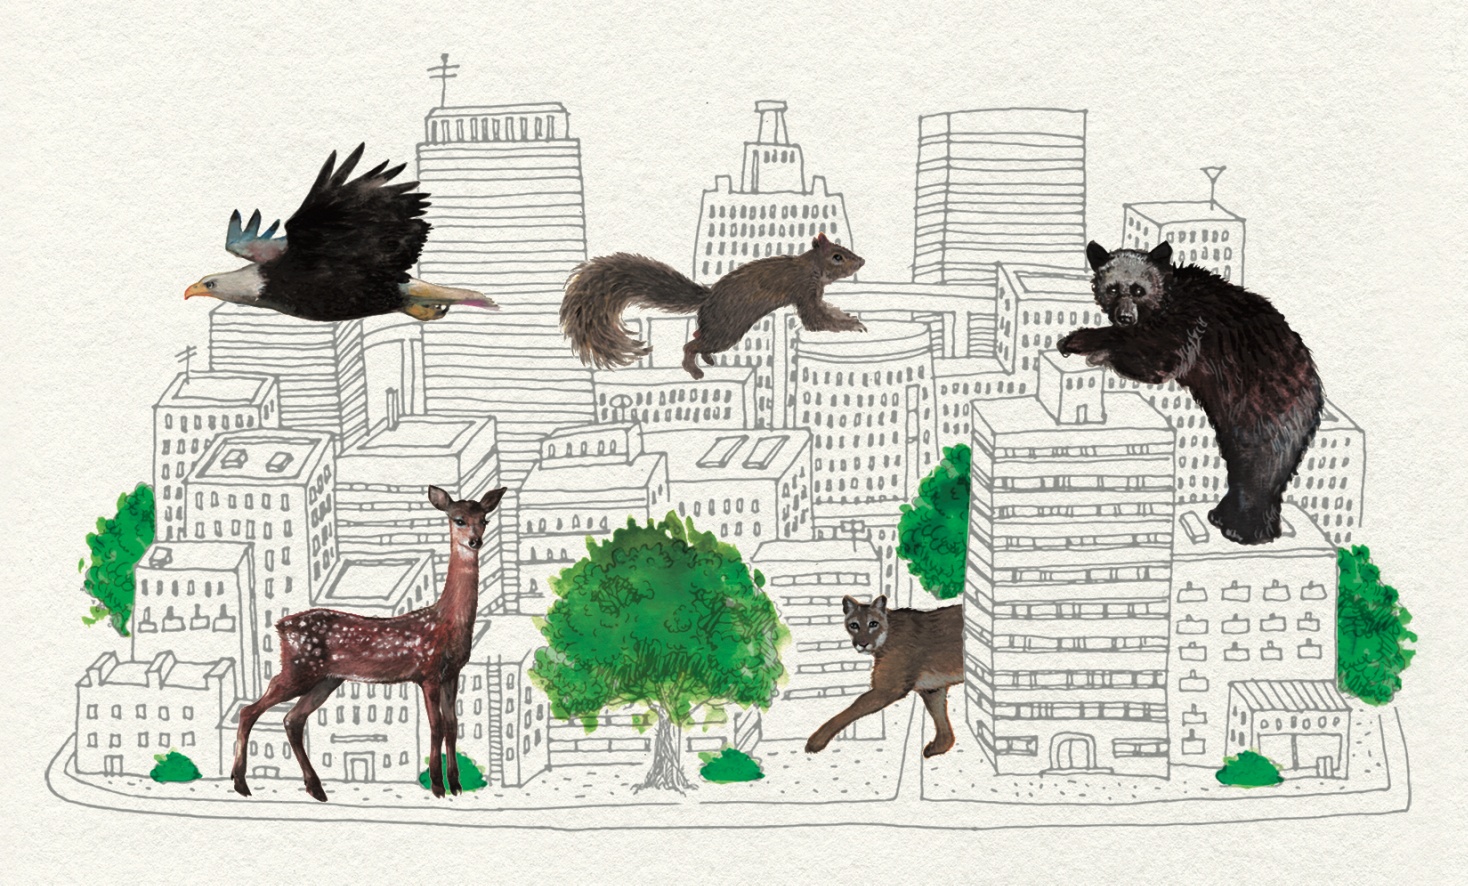 Animals Go Wild: The Urban-Animal Interface